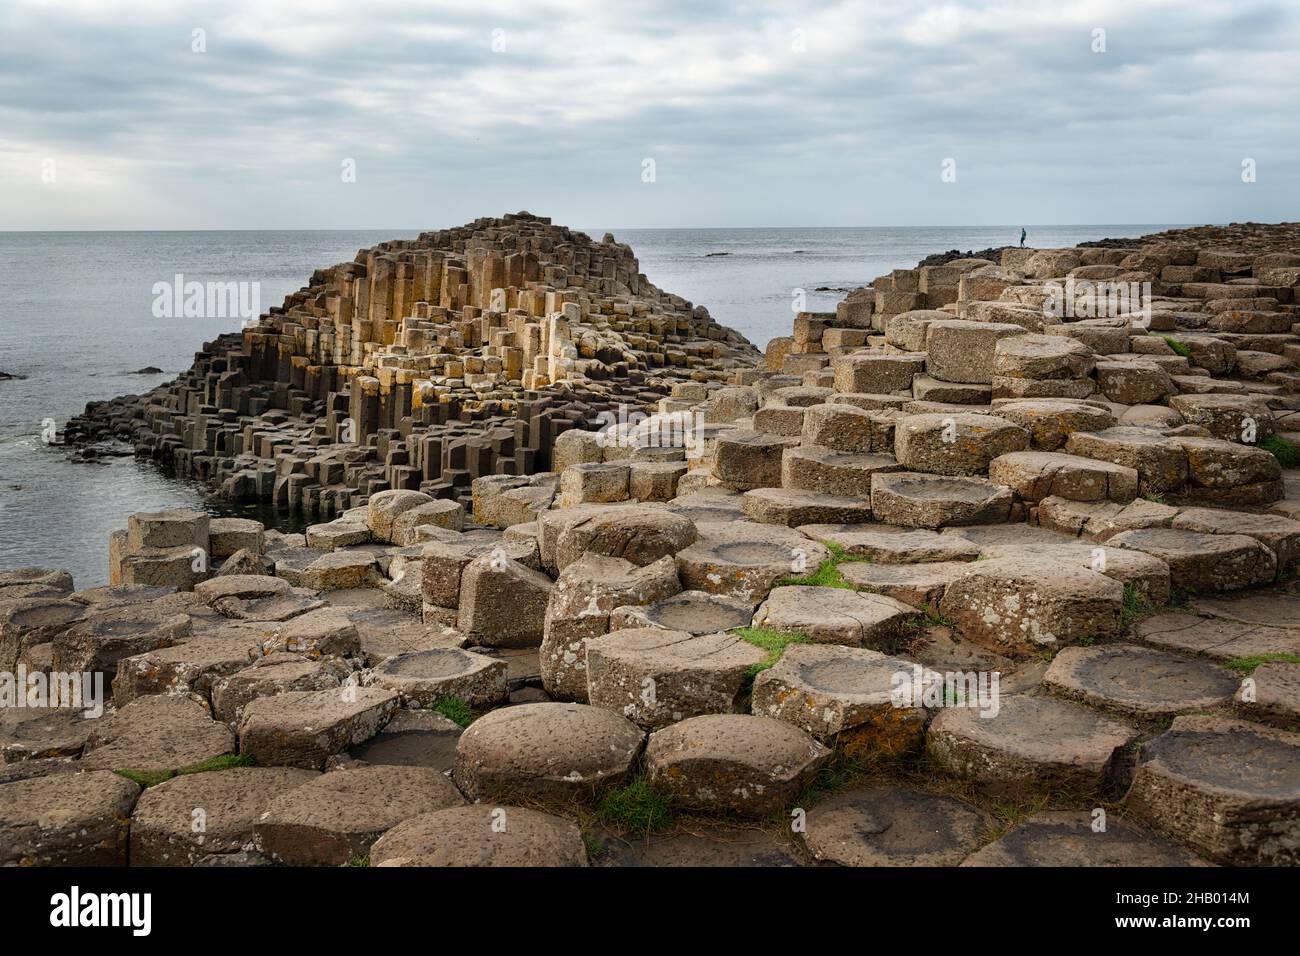 The Giant’s Causeway (40,000 interlocking basalt columns), County Antrim, Northern Ireland, UK Stock Photo